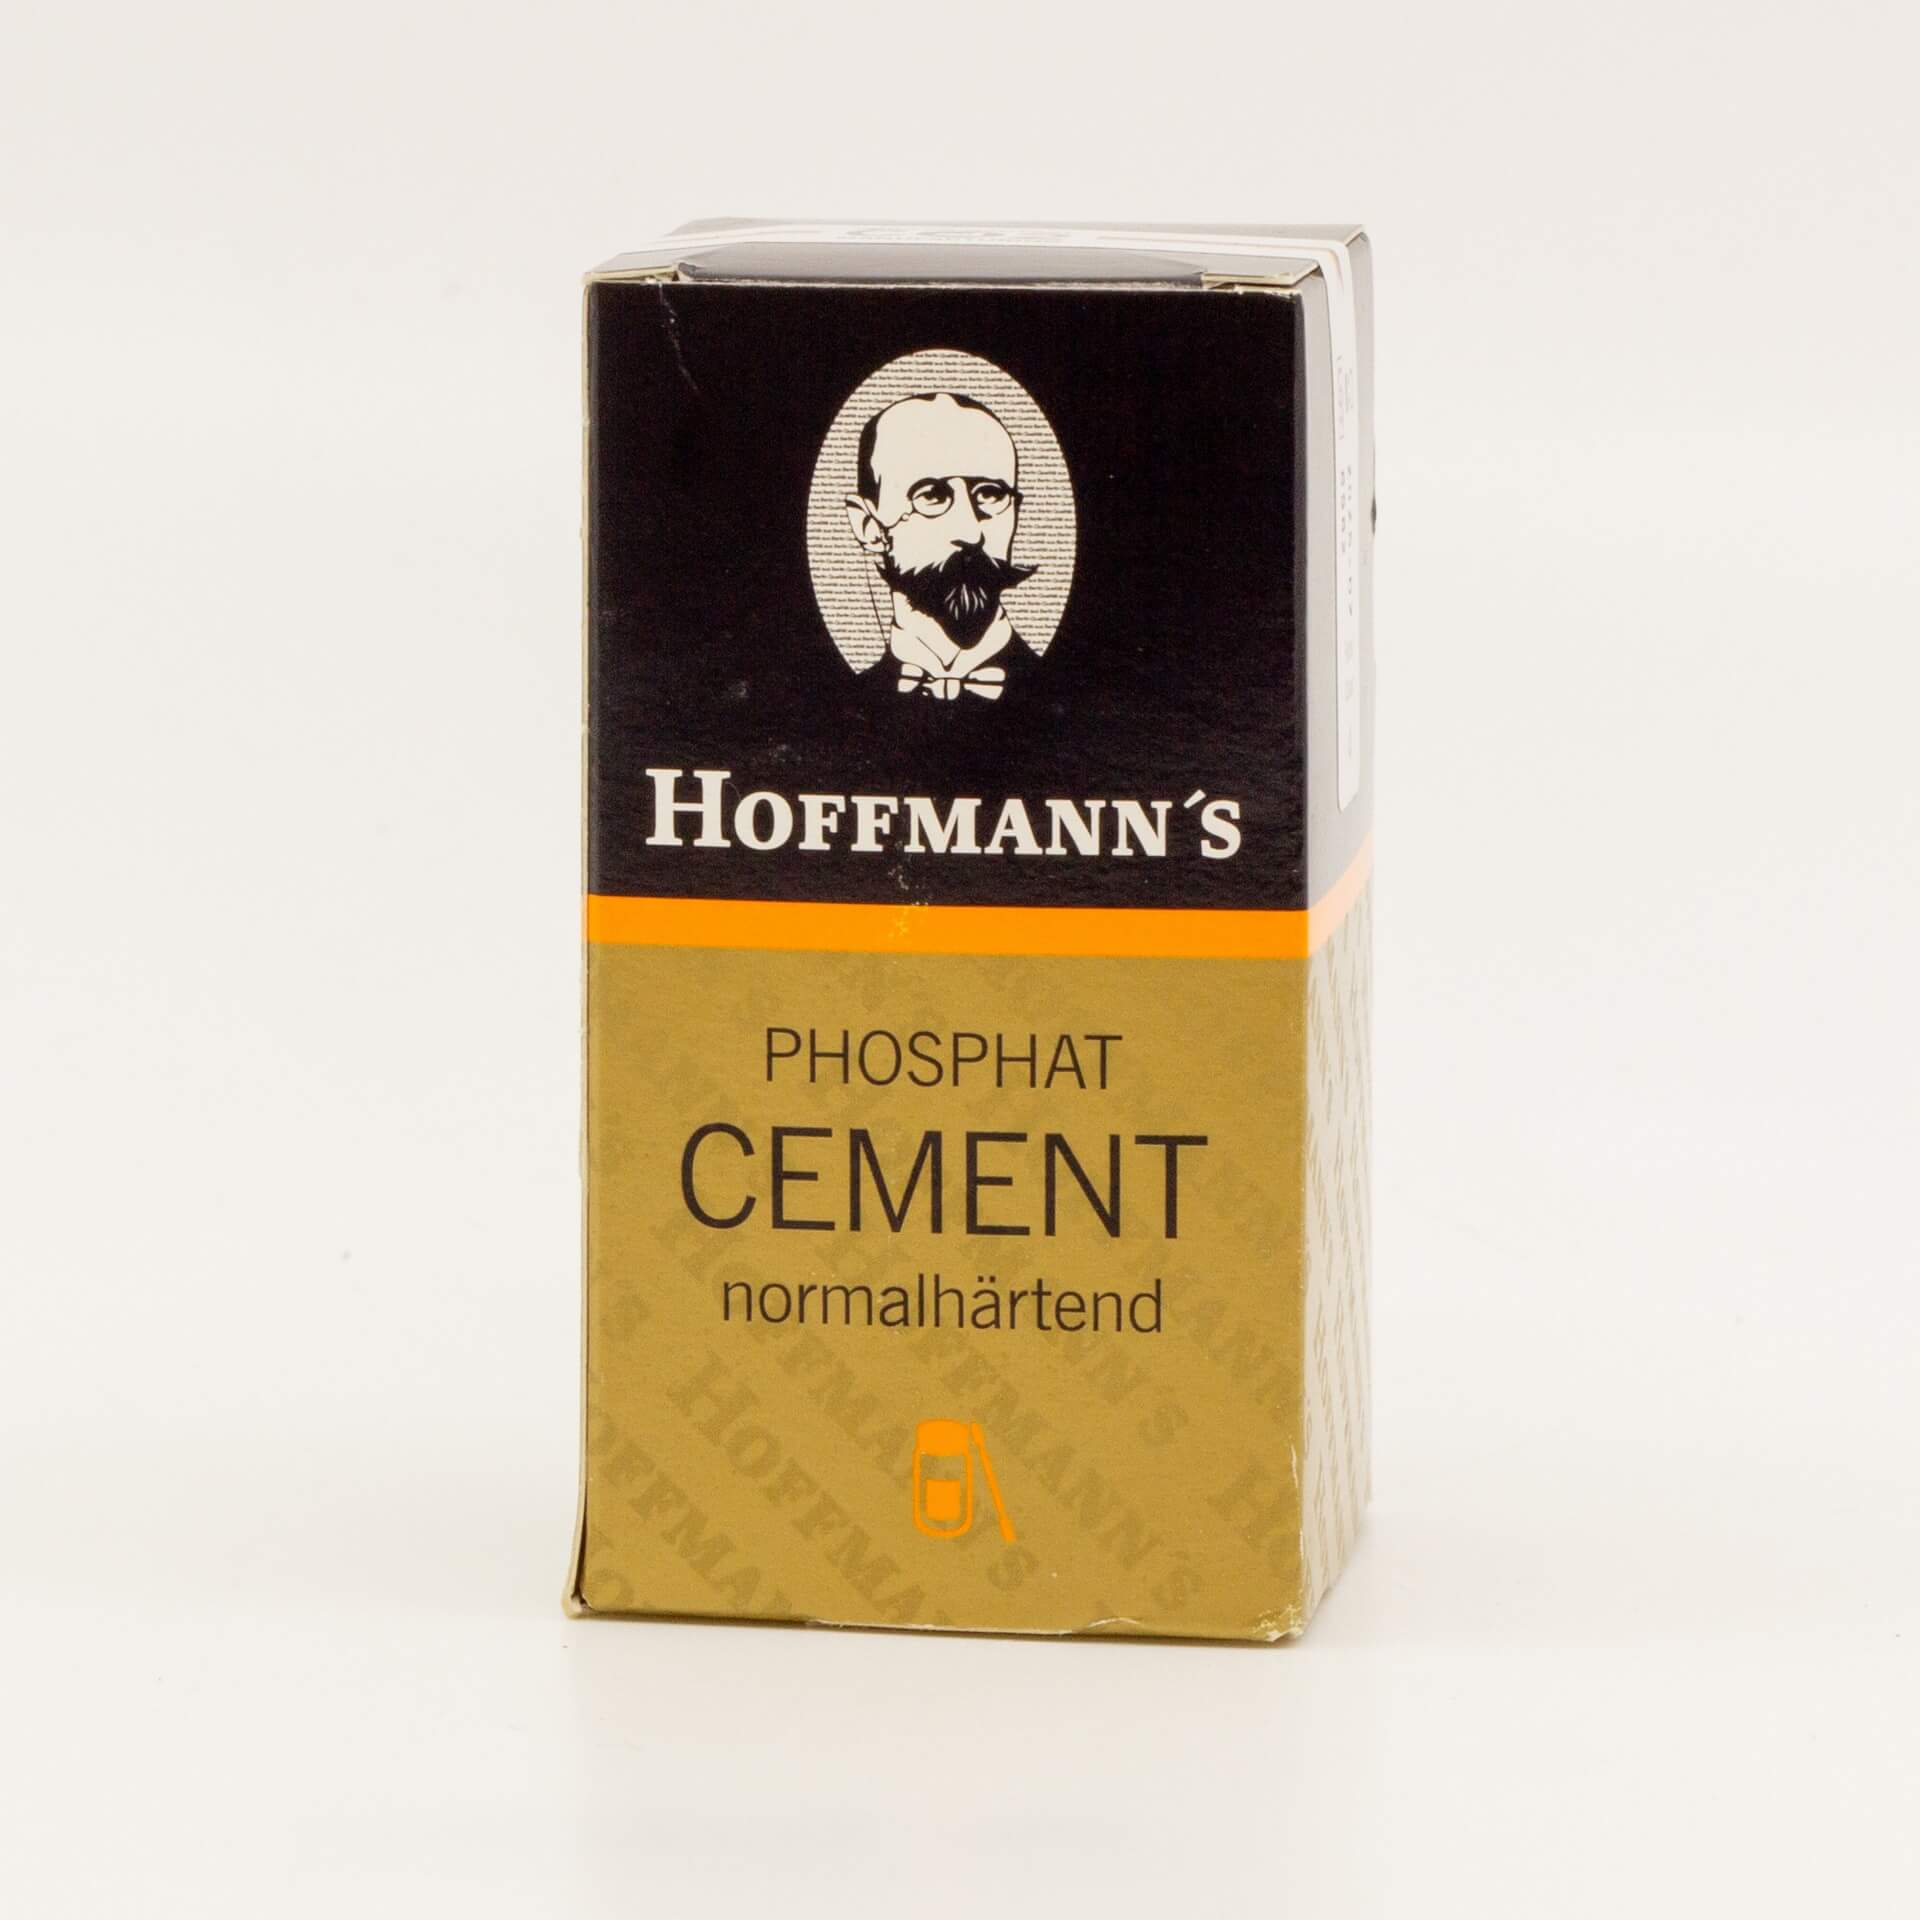 Hoffmann's Cement NH 3 hellgelb 100g (B-Ware)